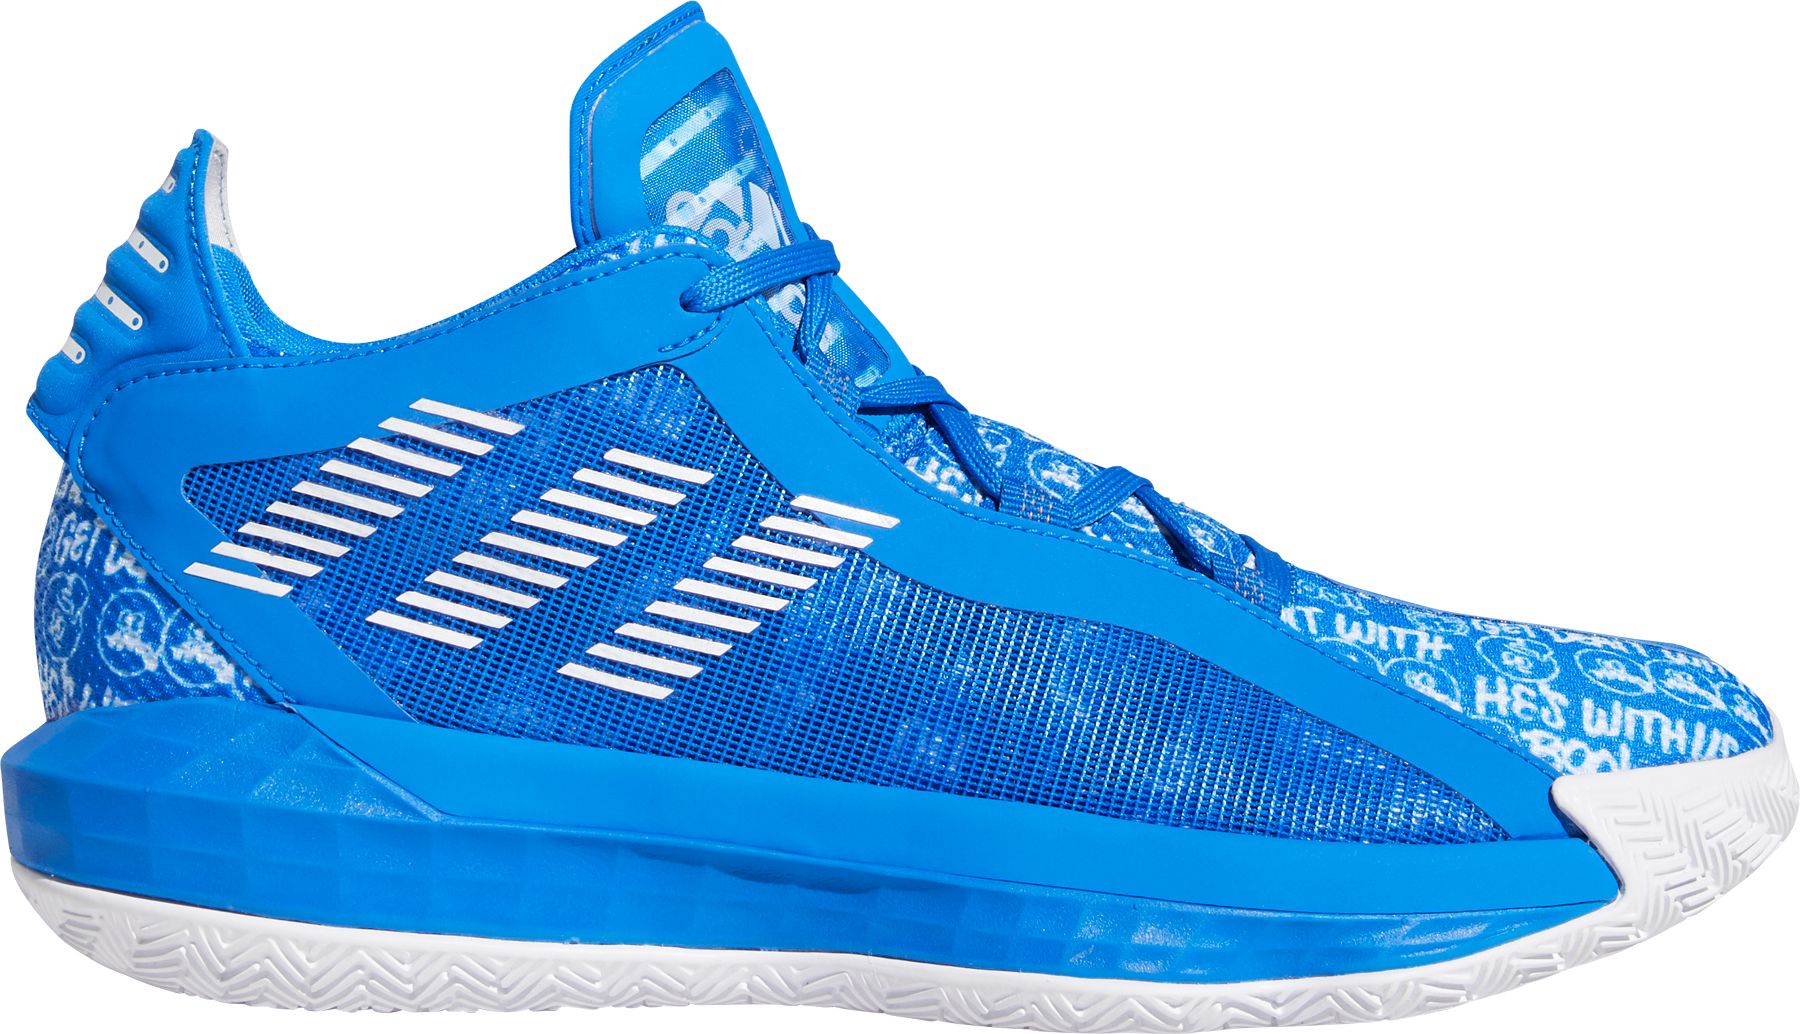 dame 6 basketball shoes